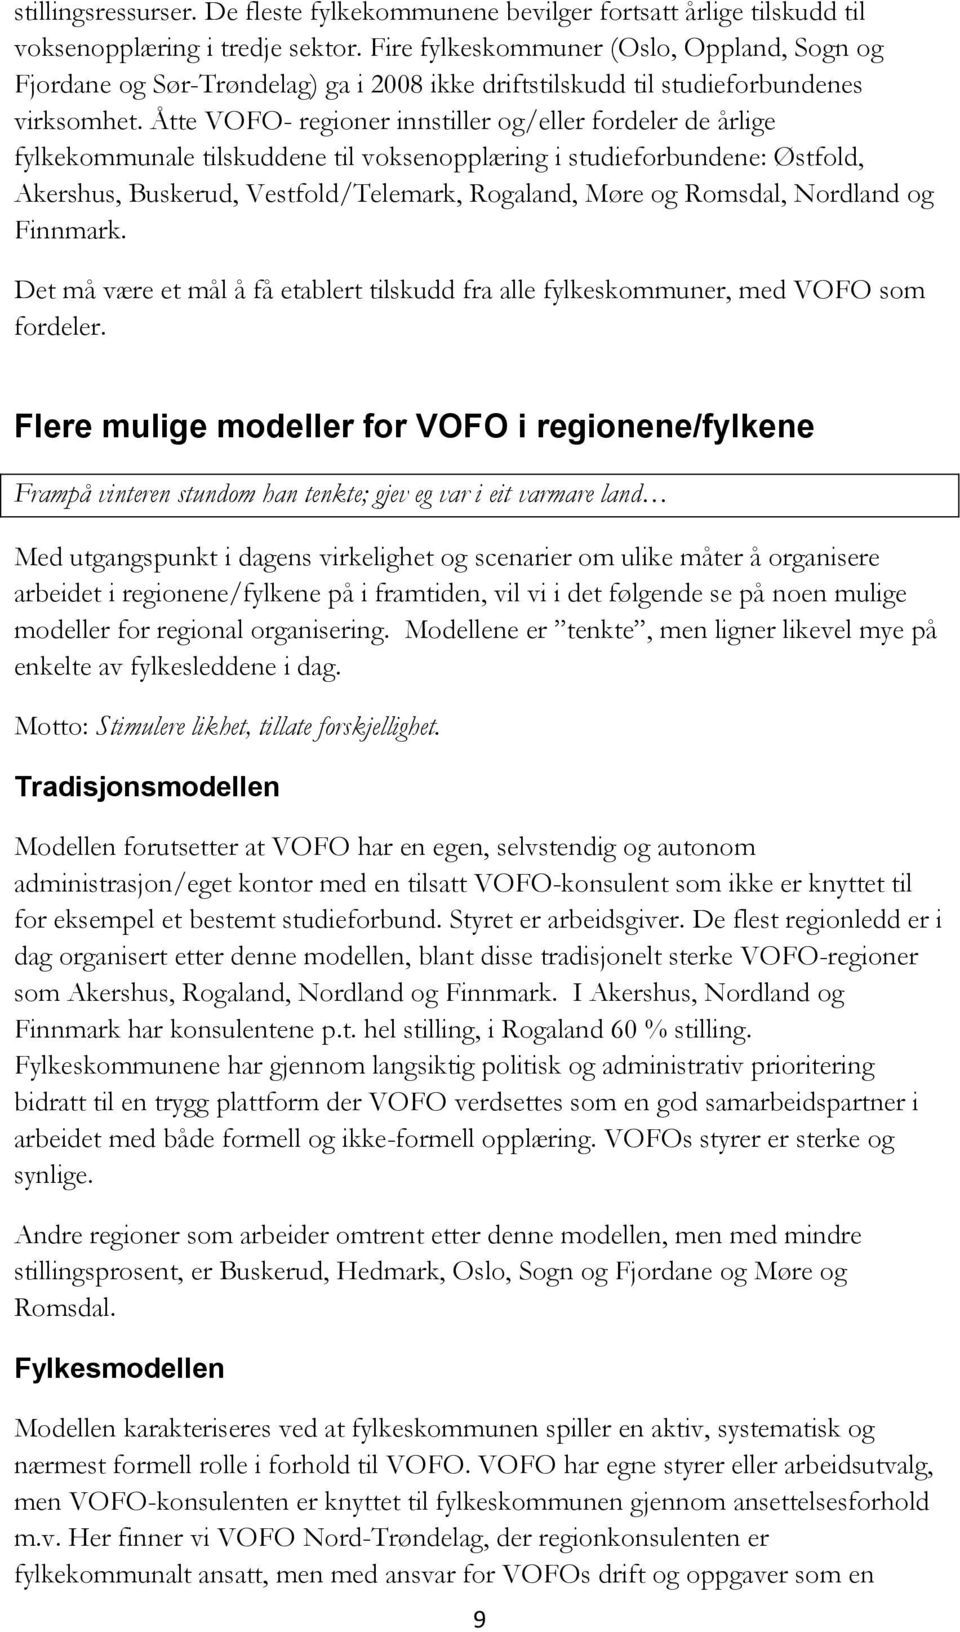 Åtte VOFO- regioner innstiller og/eller fordeler de årlige fylkekommunale tilskuddene til voksenopplæring i studieforbundene: Østfold, Akershus, Buskerud, Vestfold/Telemark, Rogaland, Møre og